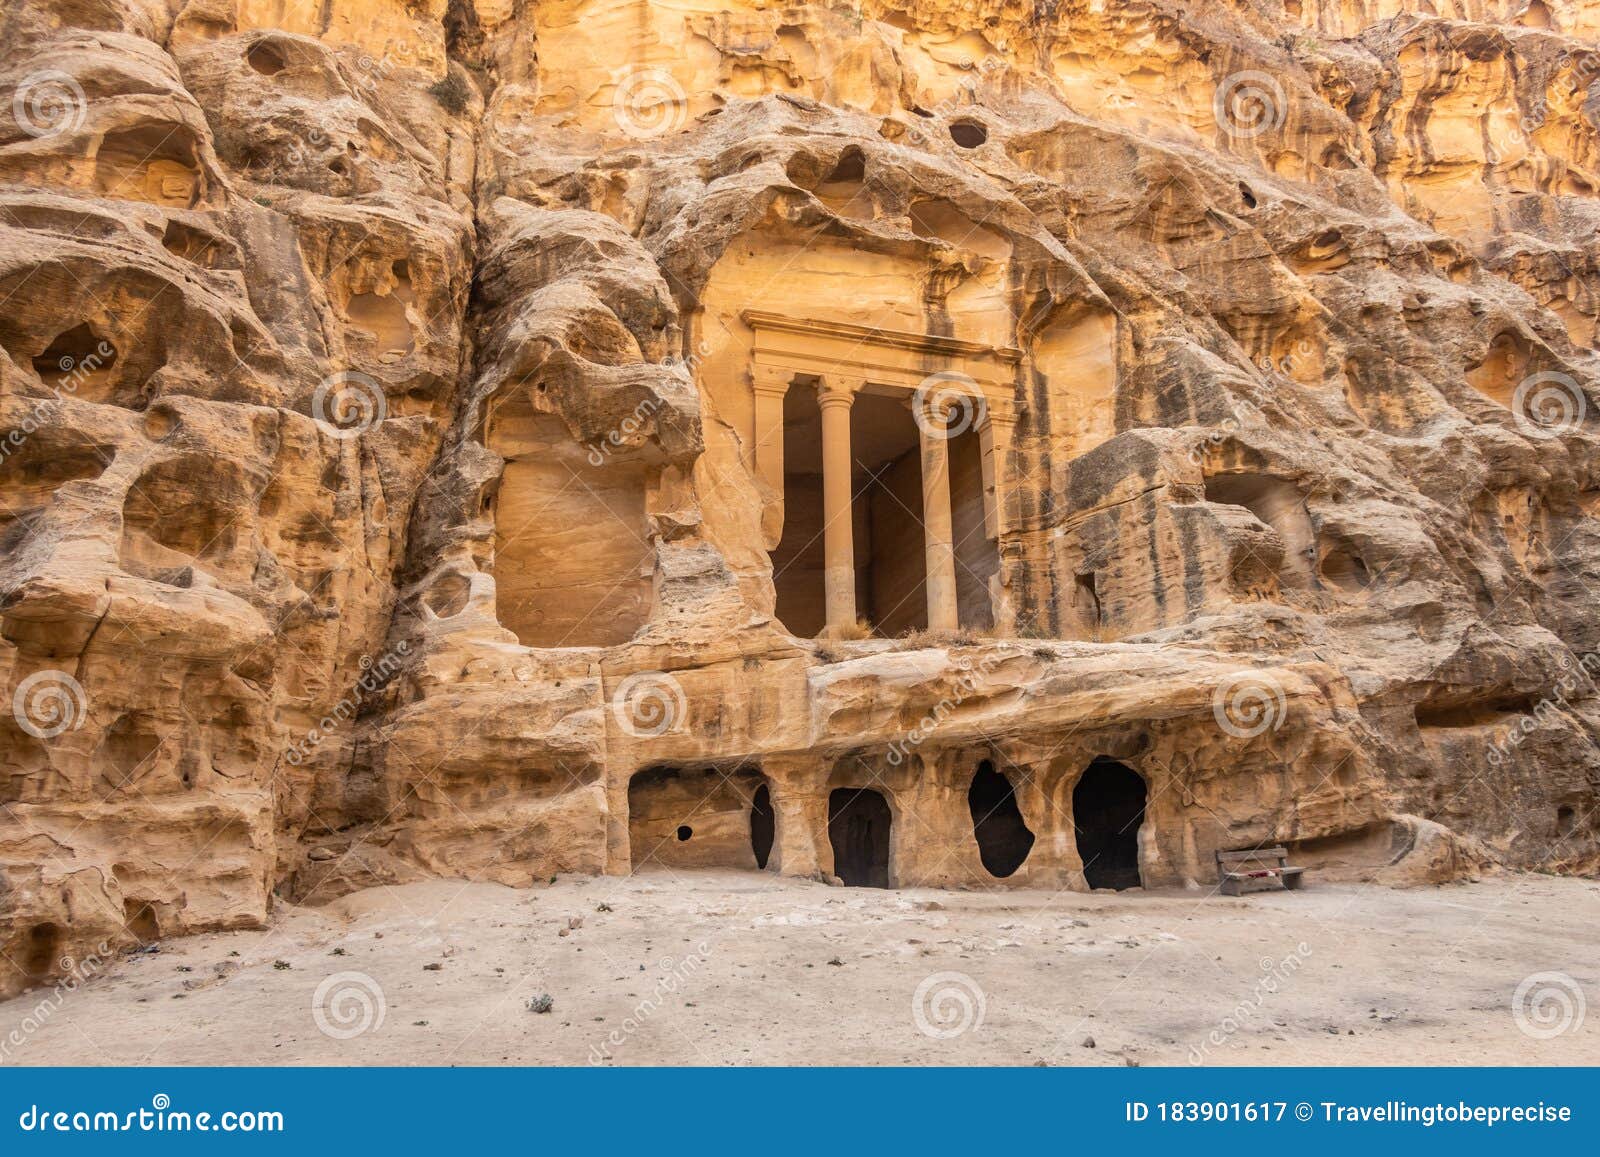 world heritage sites in jordan